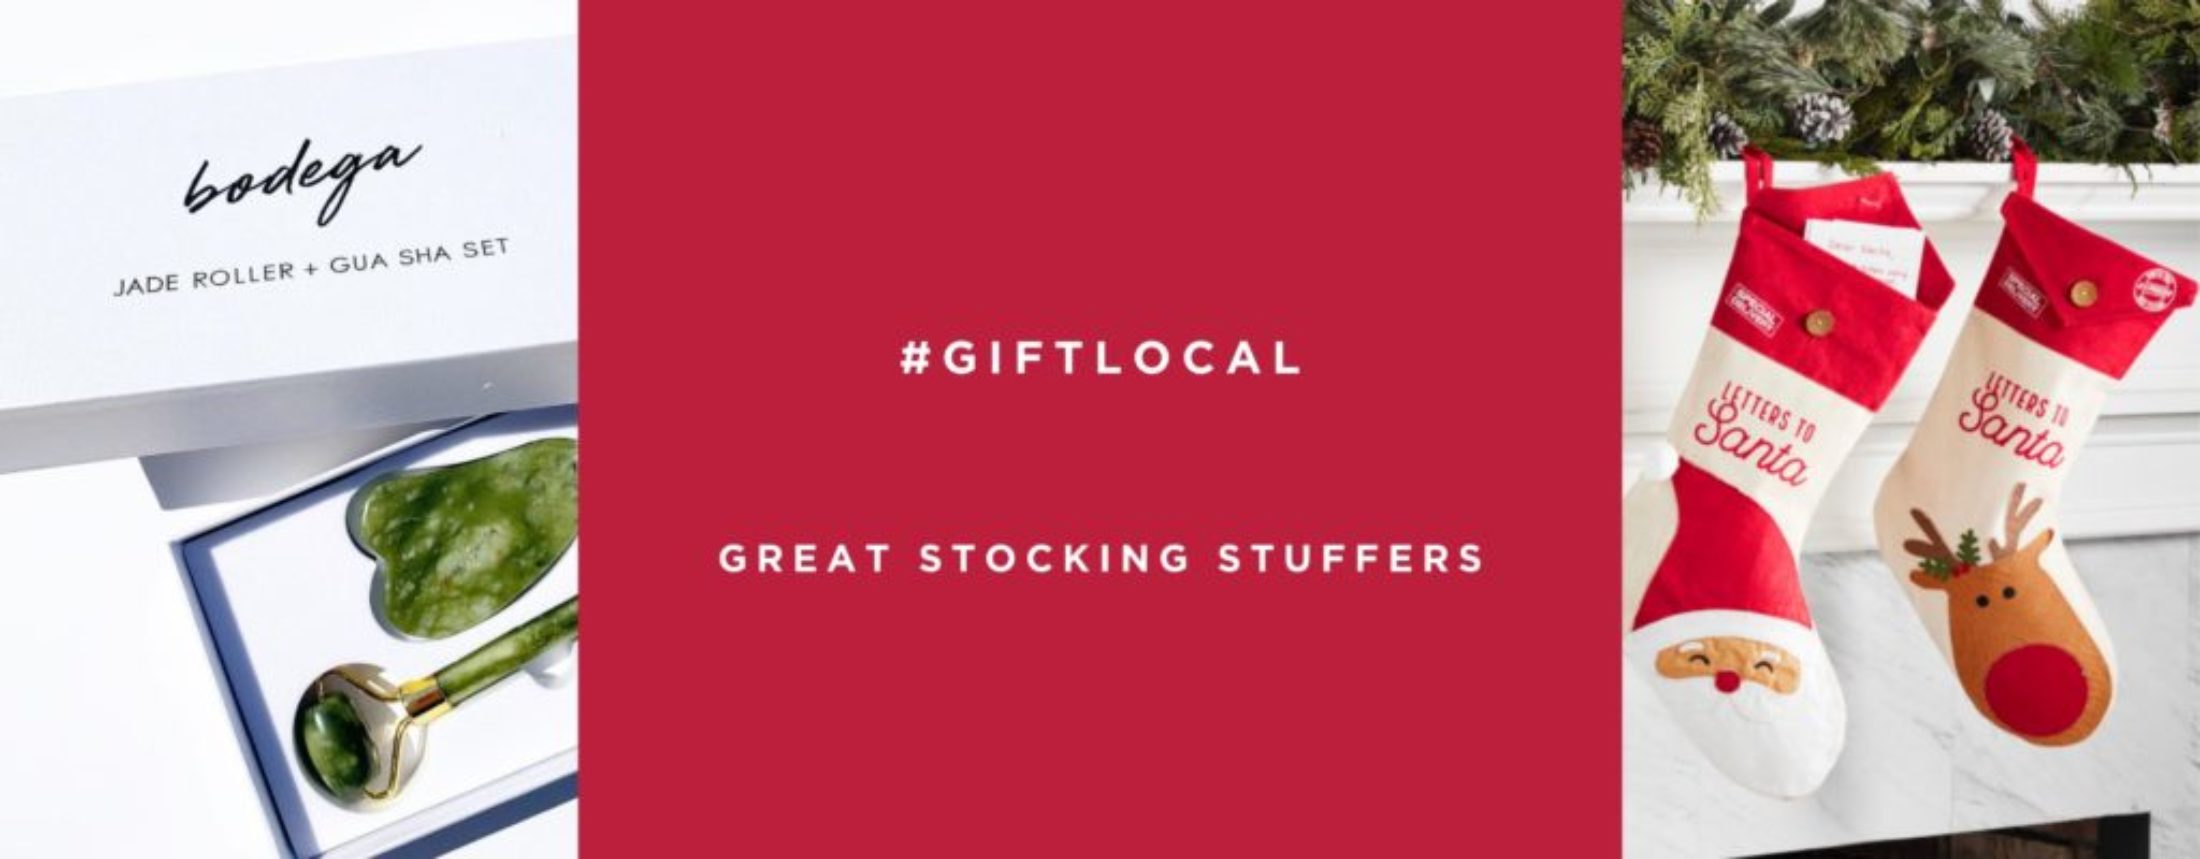 gift local stocking stuffers banner